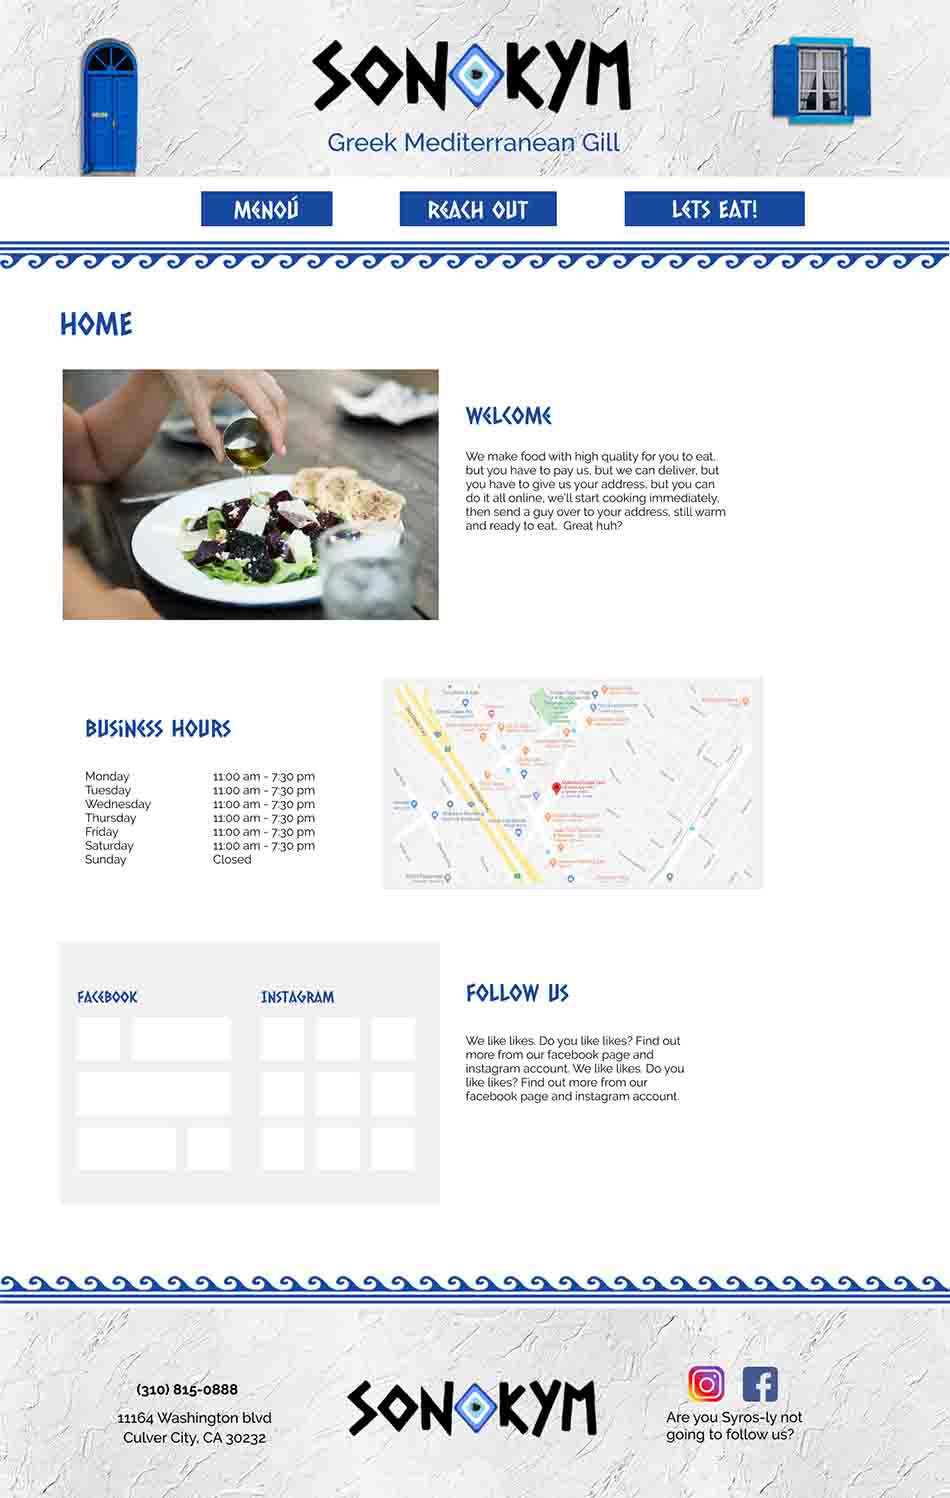 Desktop Home page